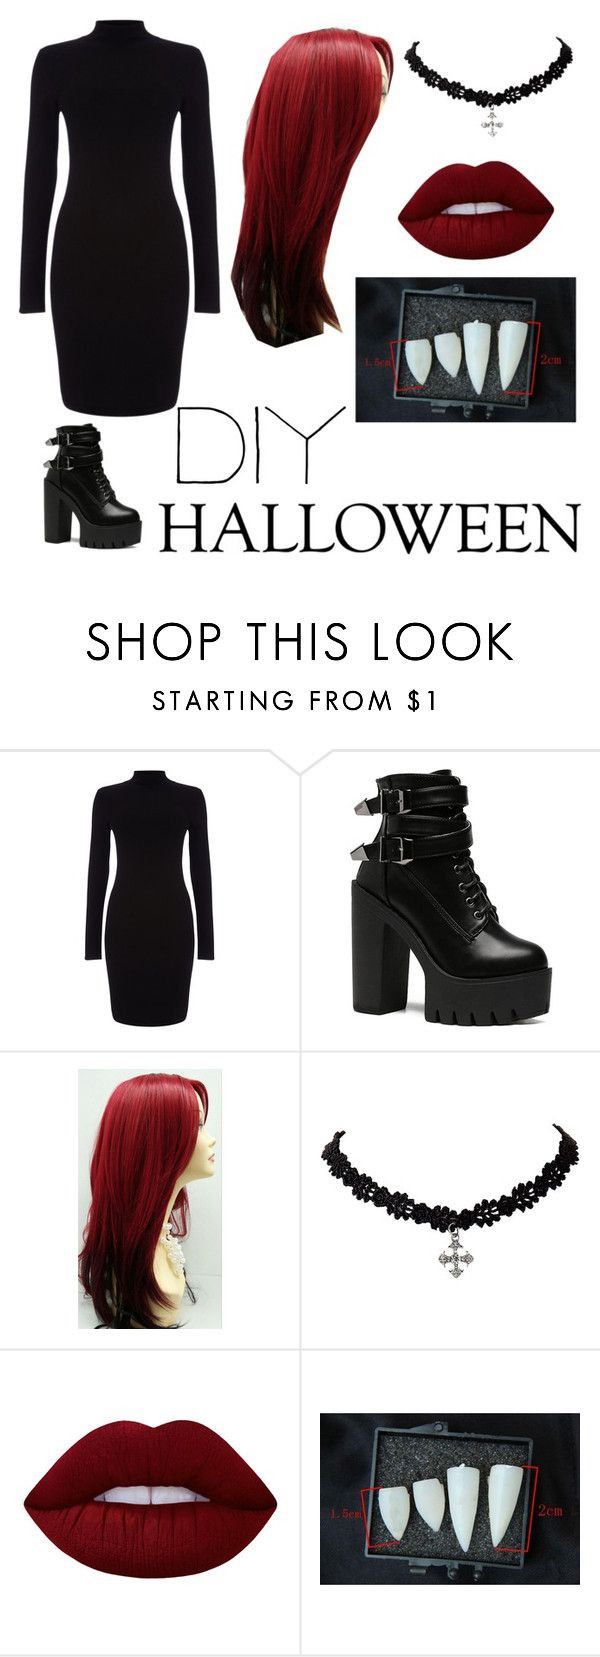 Best ideas about Vampire Halloween Costume DIY
. Save or Pin Best 25 Diy vampire costume ideas on Pinterest Now.